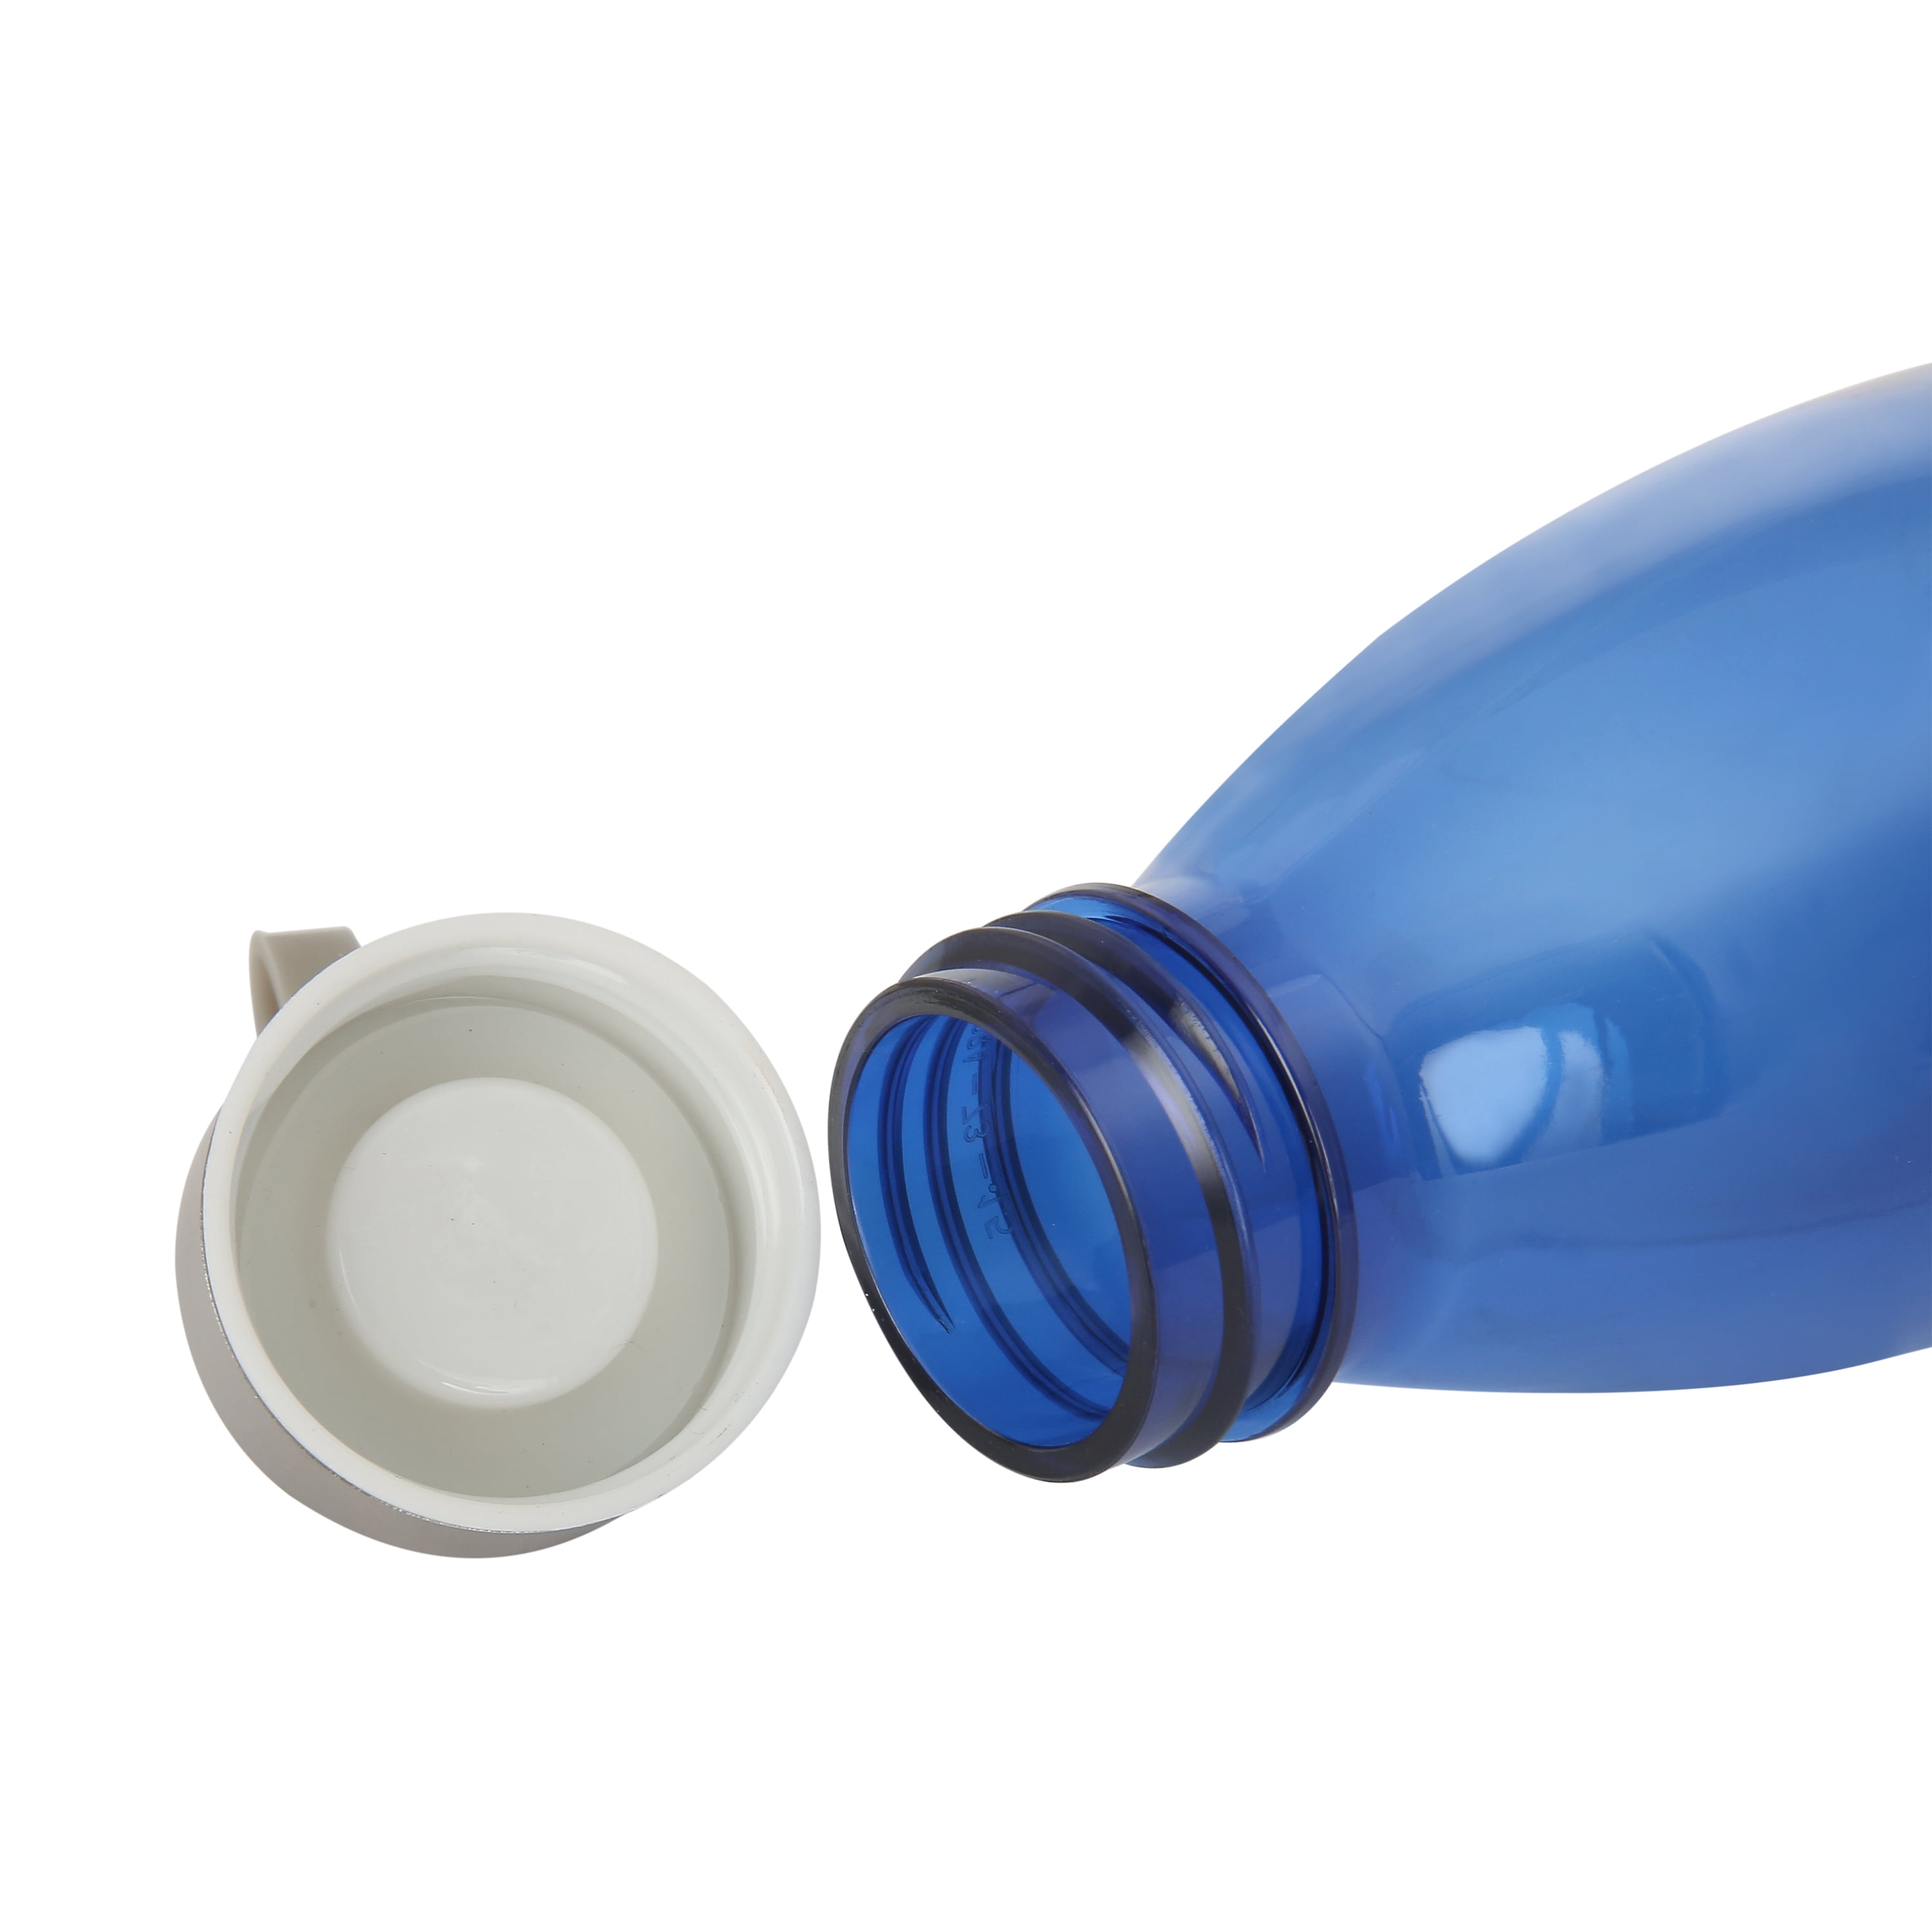 6 Pack Clear Water Bottles Bulk, 24oz Reusable Plastic Plain Water Bottle,  Leak Proof & Lightweight …See more 6 Pack Clear Water Bottles Bulk, 24oz